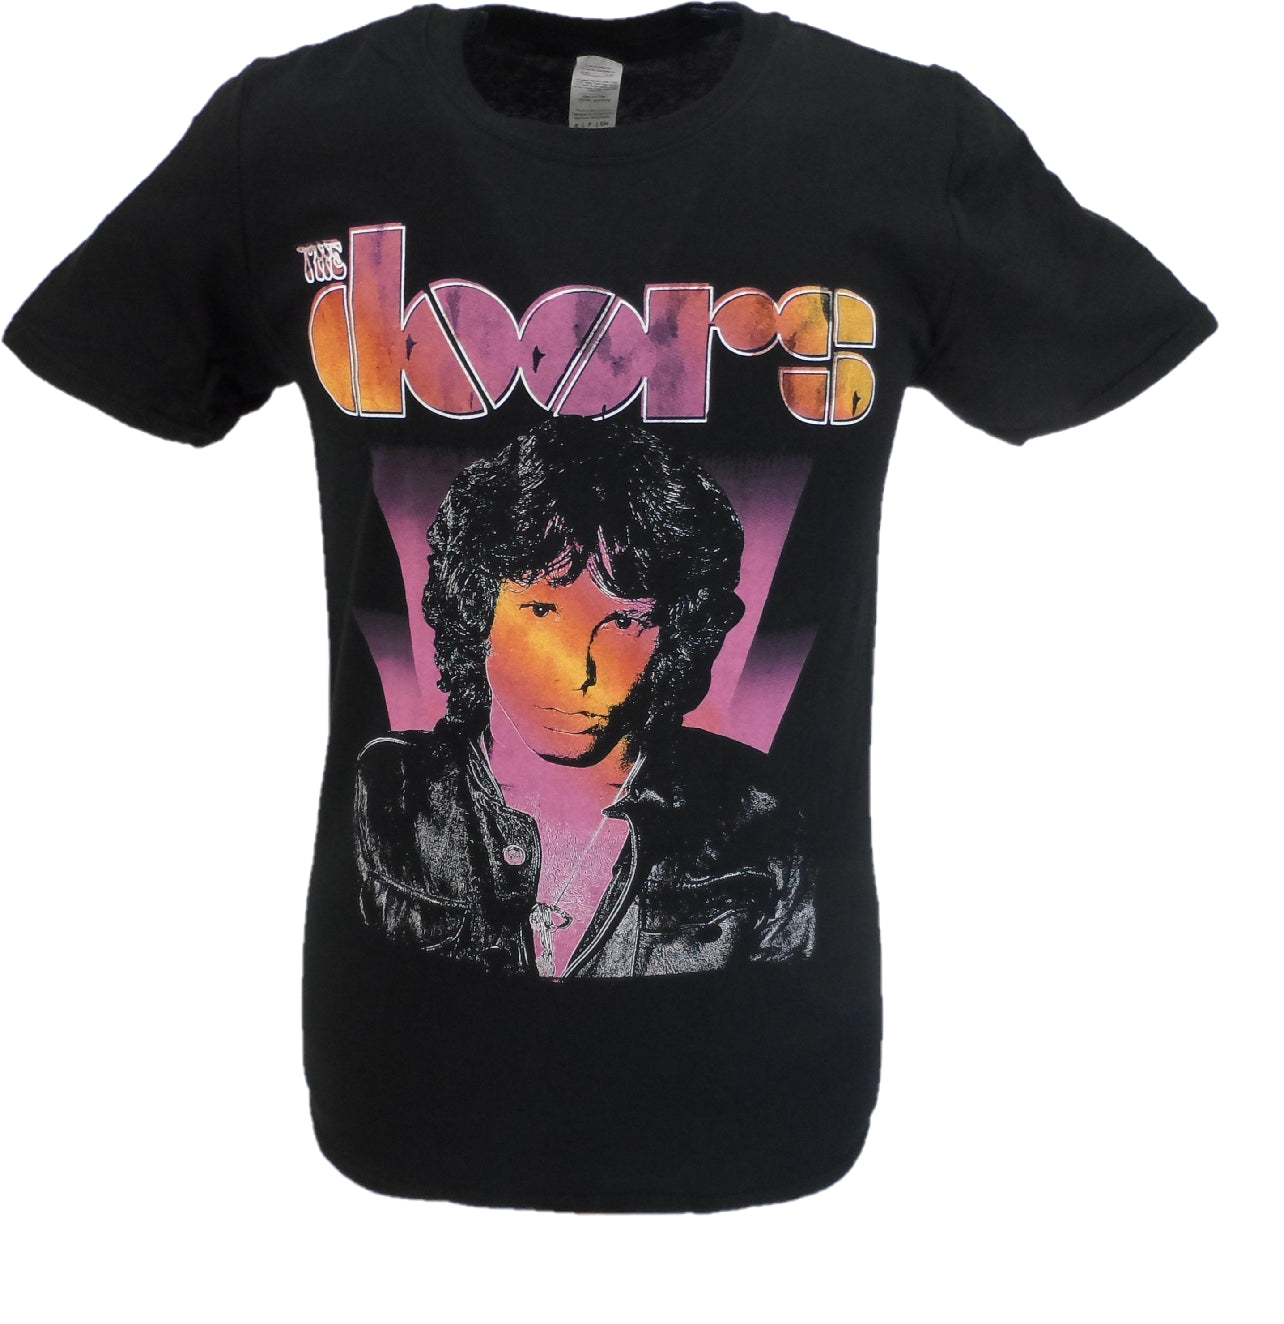 The Doors T Shirts & Clothing